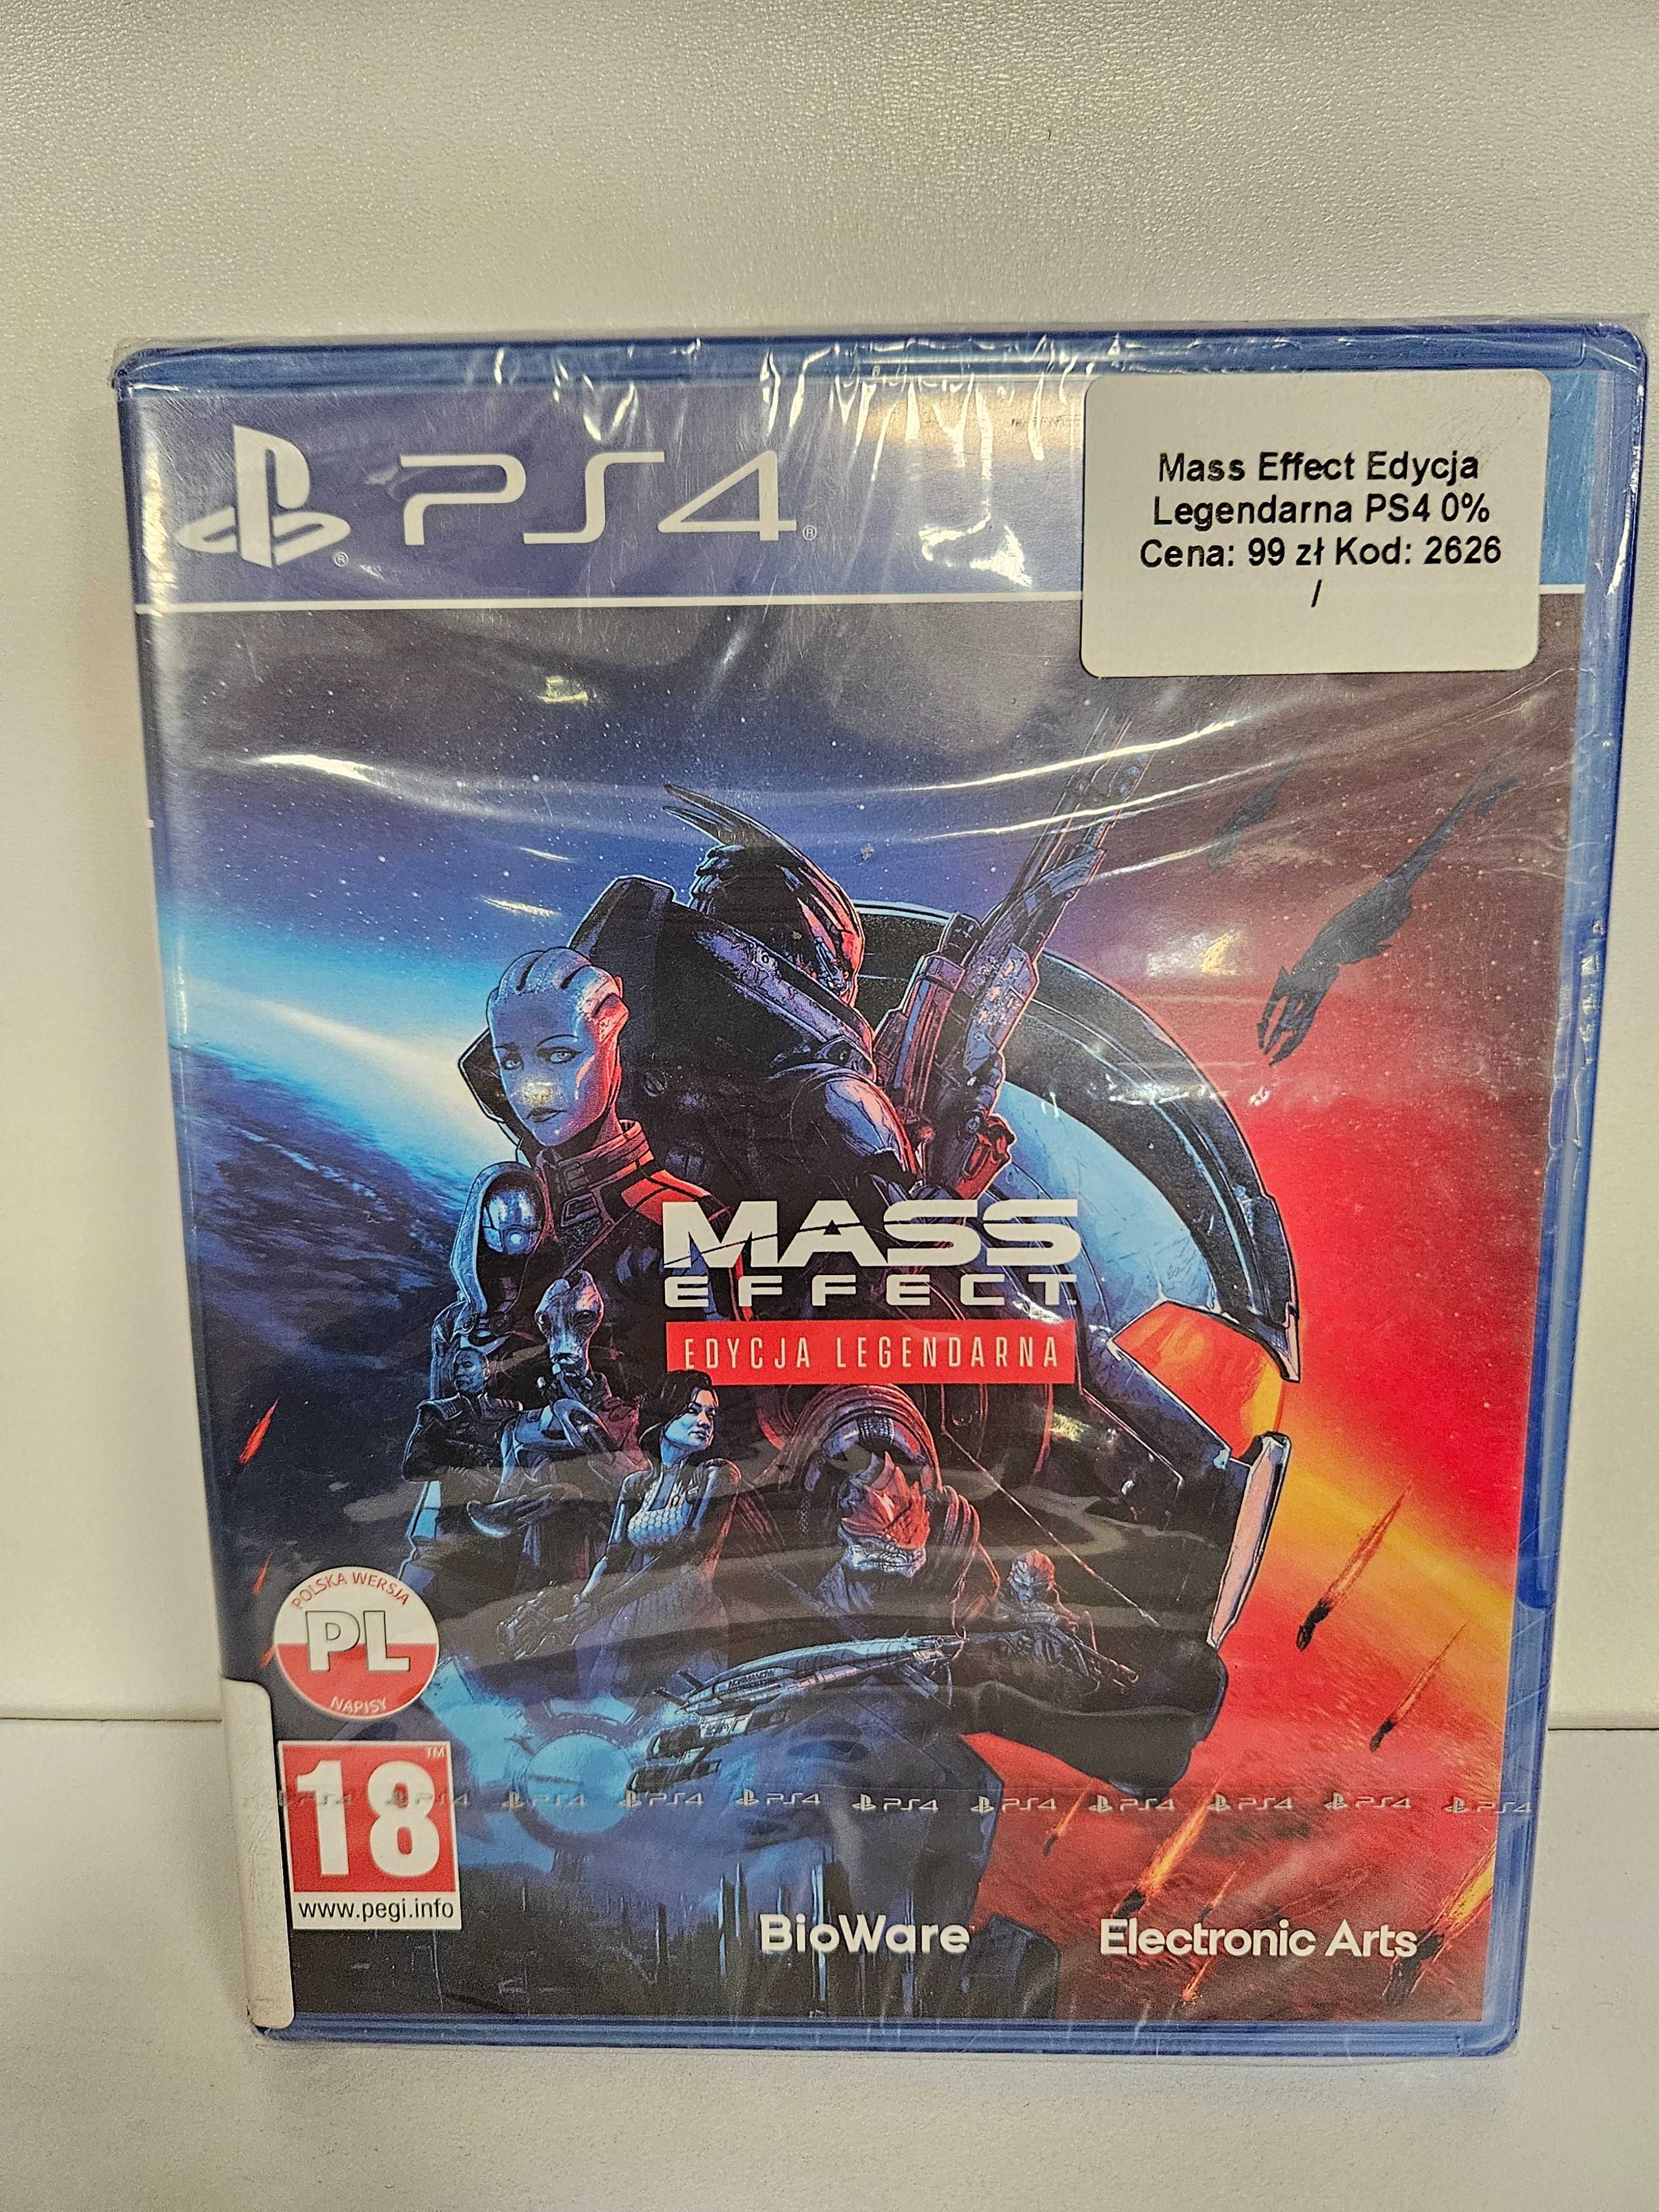 Mass Effect Edycja Legendarna PS4 - As Game & GSM Astra